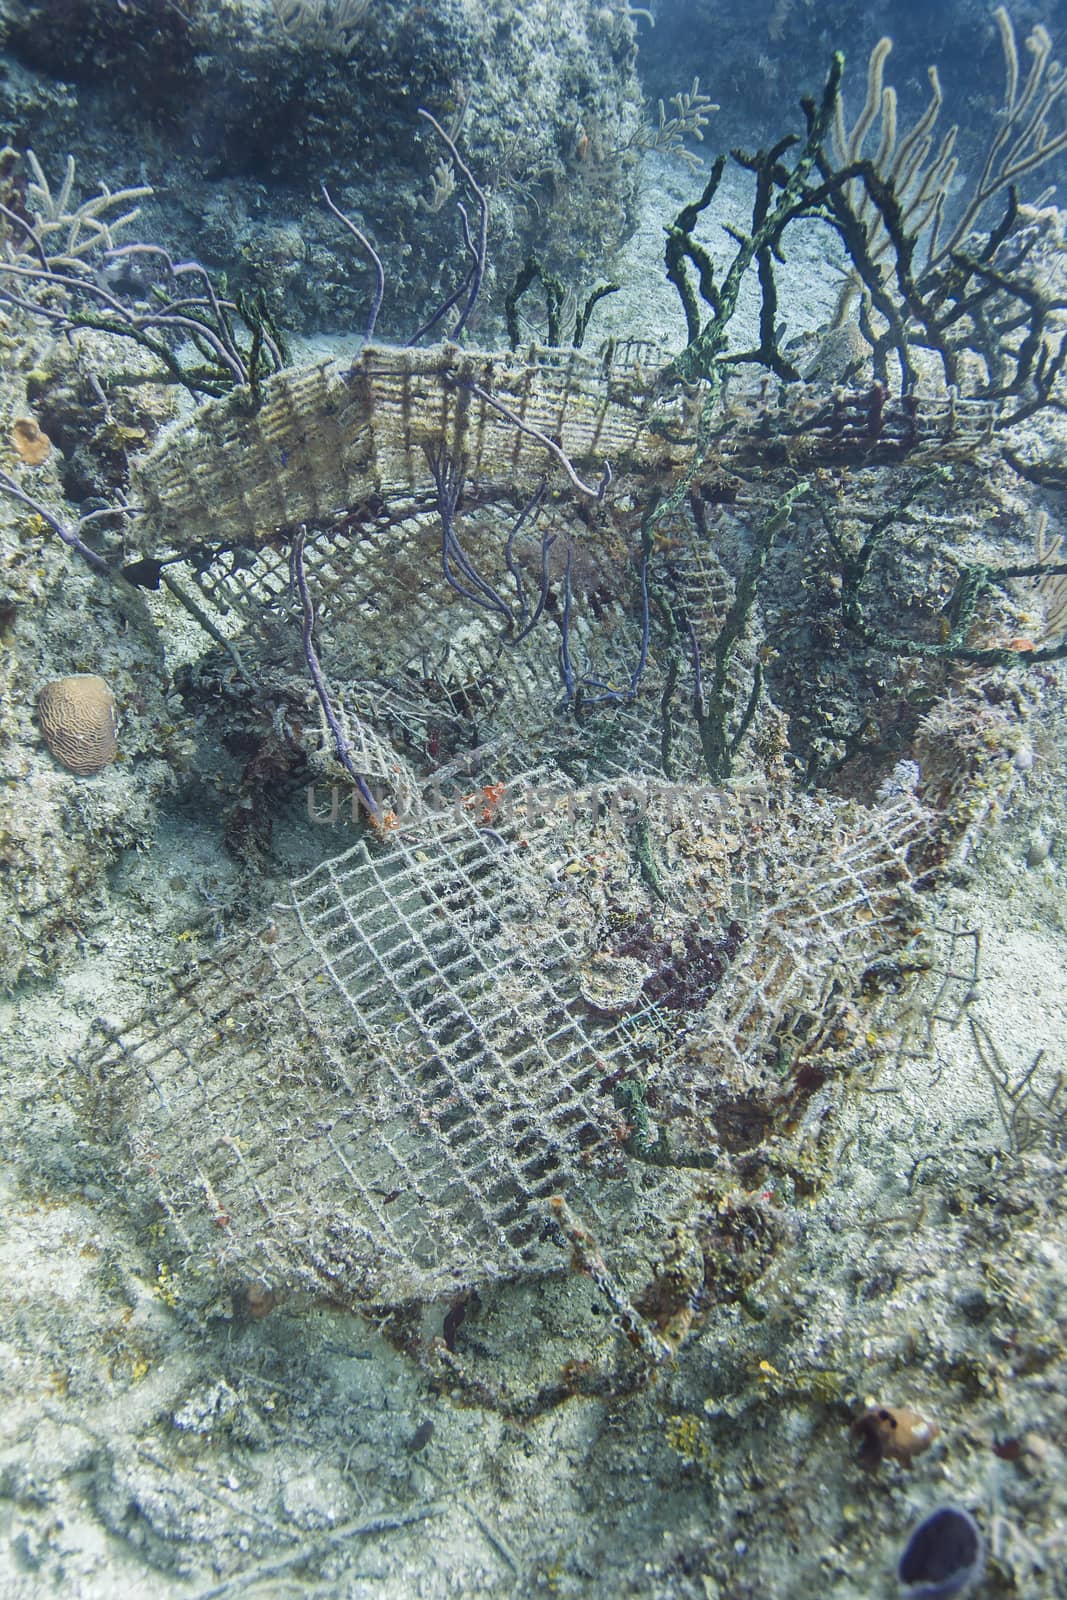 coral reef growing through metal wreckage